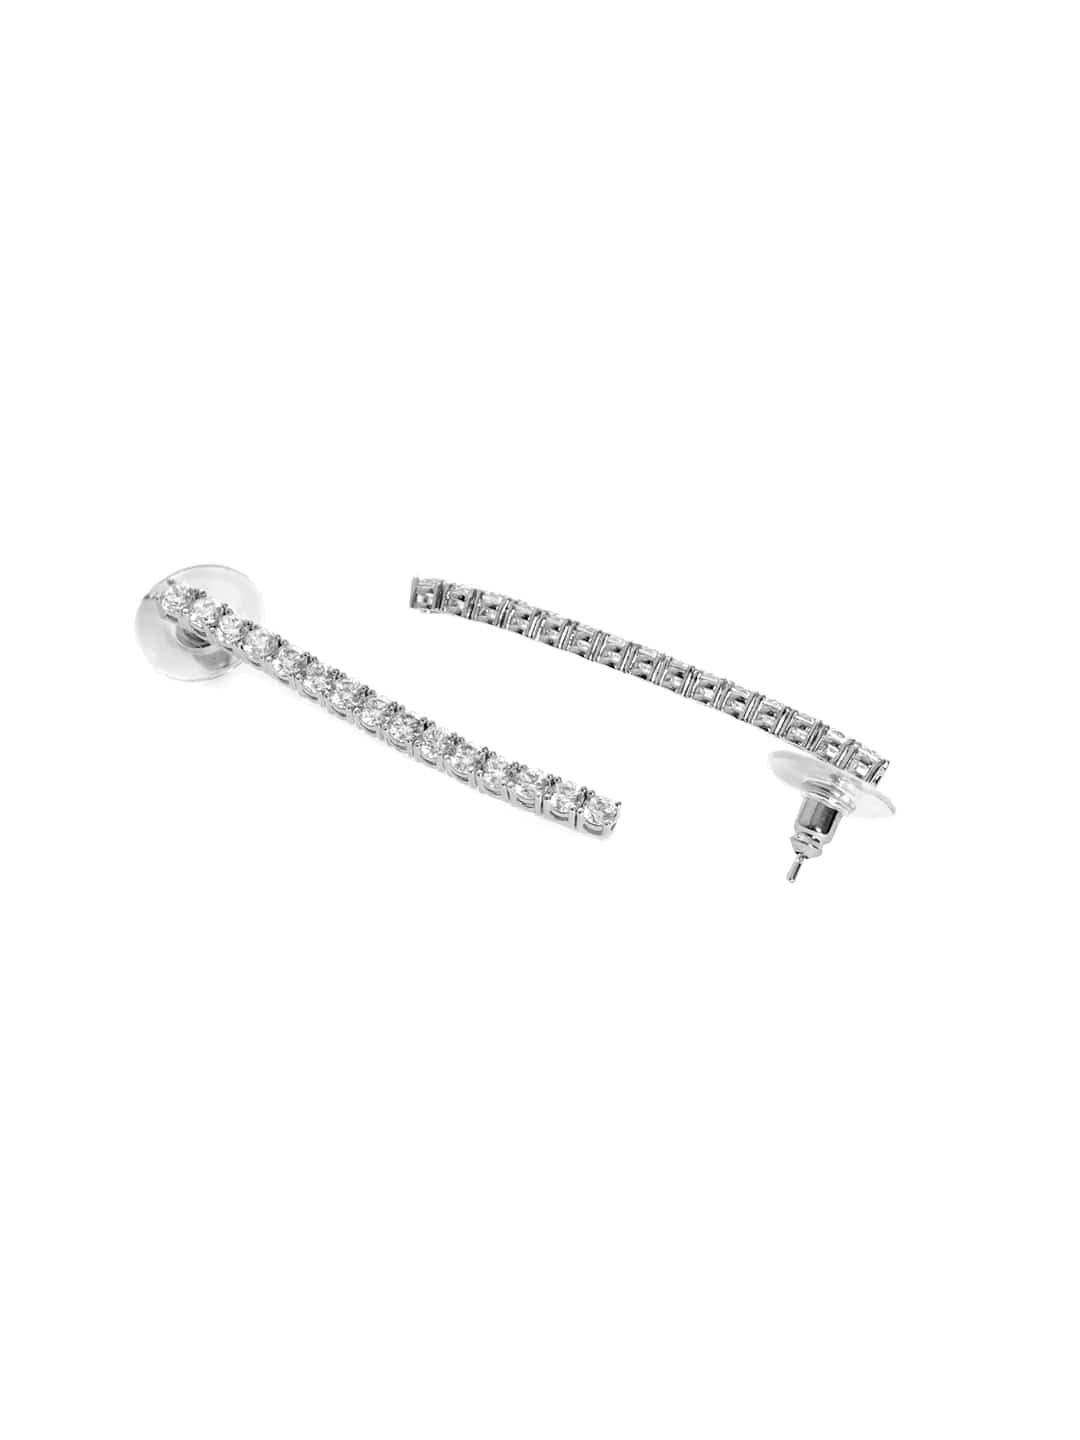 Diamond Necklace set Online